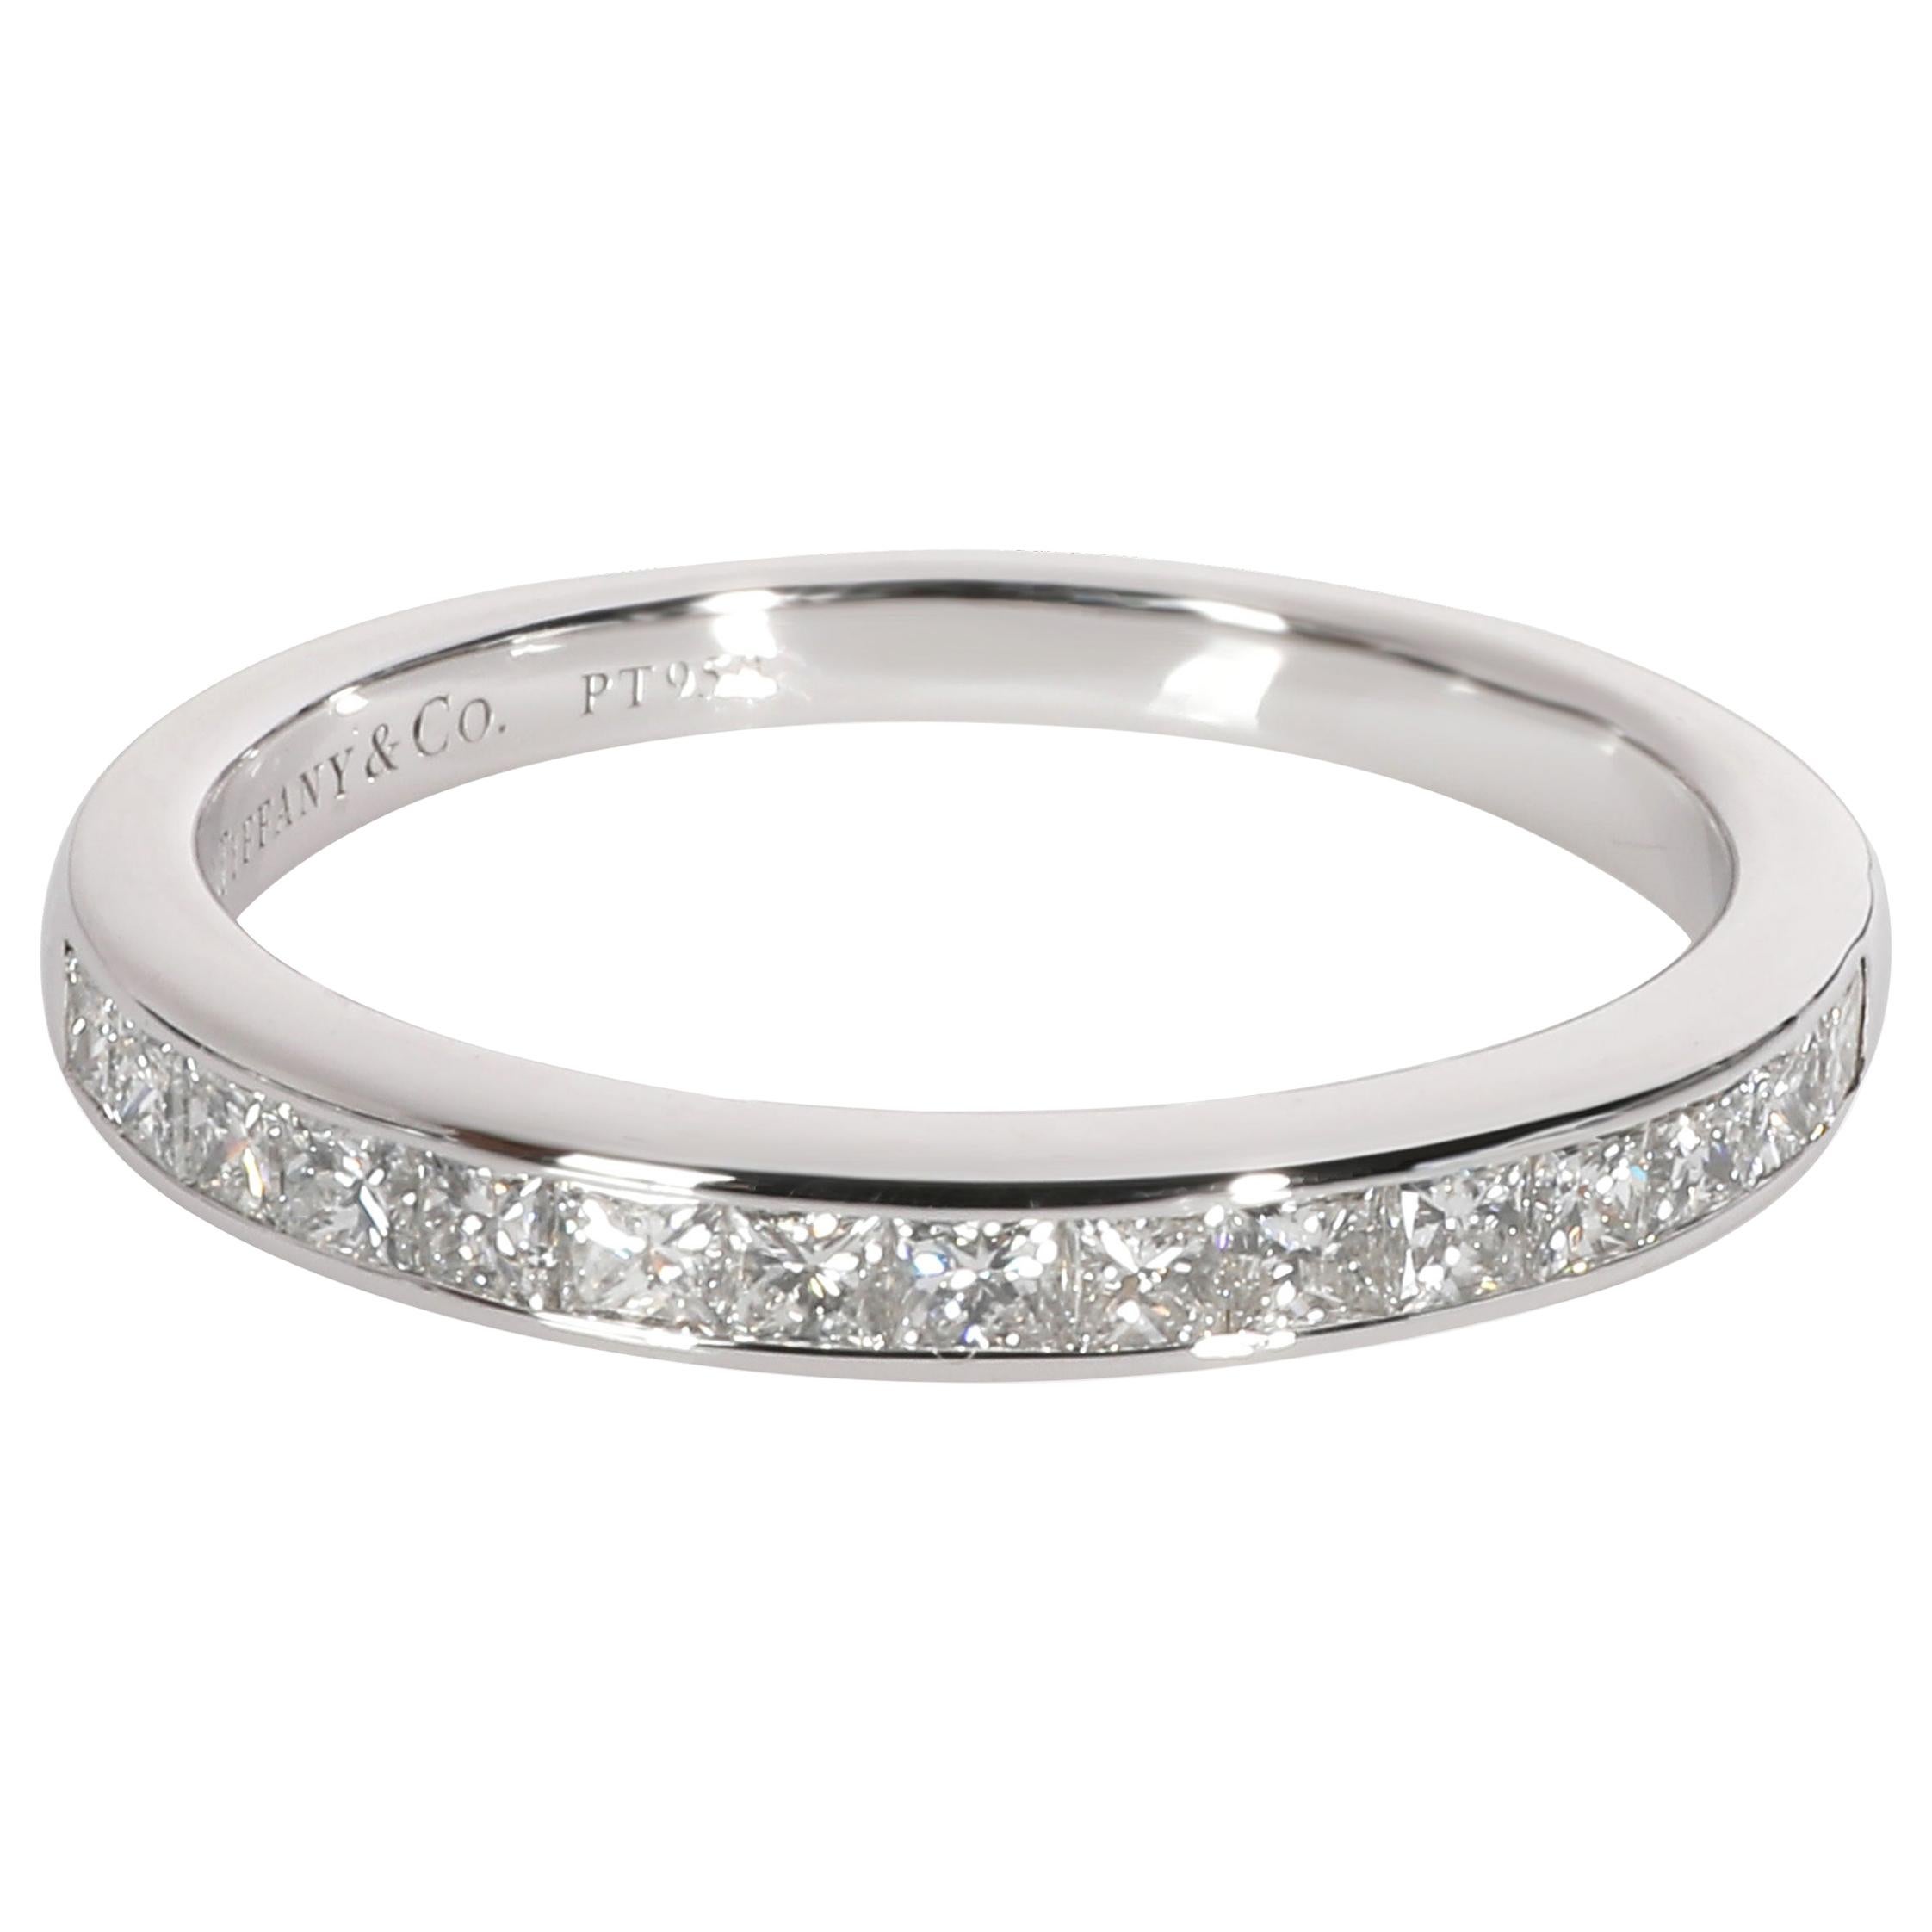 Tiffany & Co. Channel Set Princess Diamond Wedding Band in Platinum 0.5 Carat